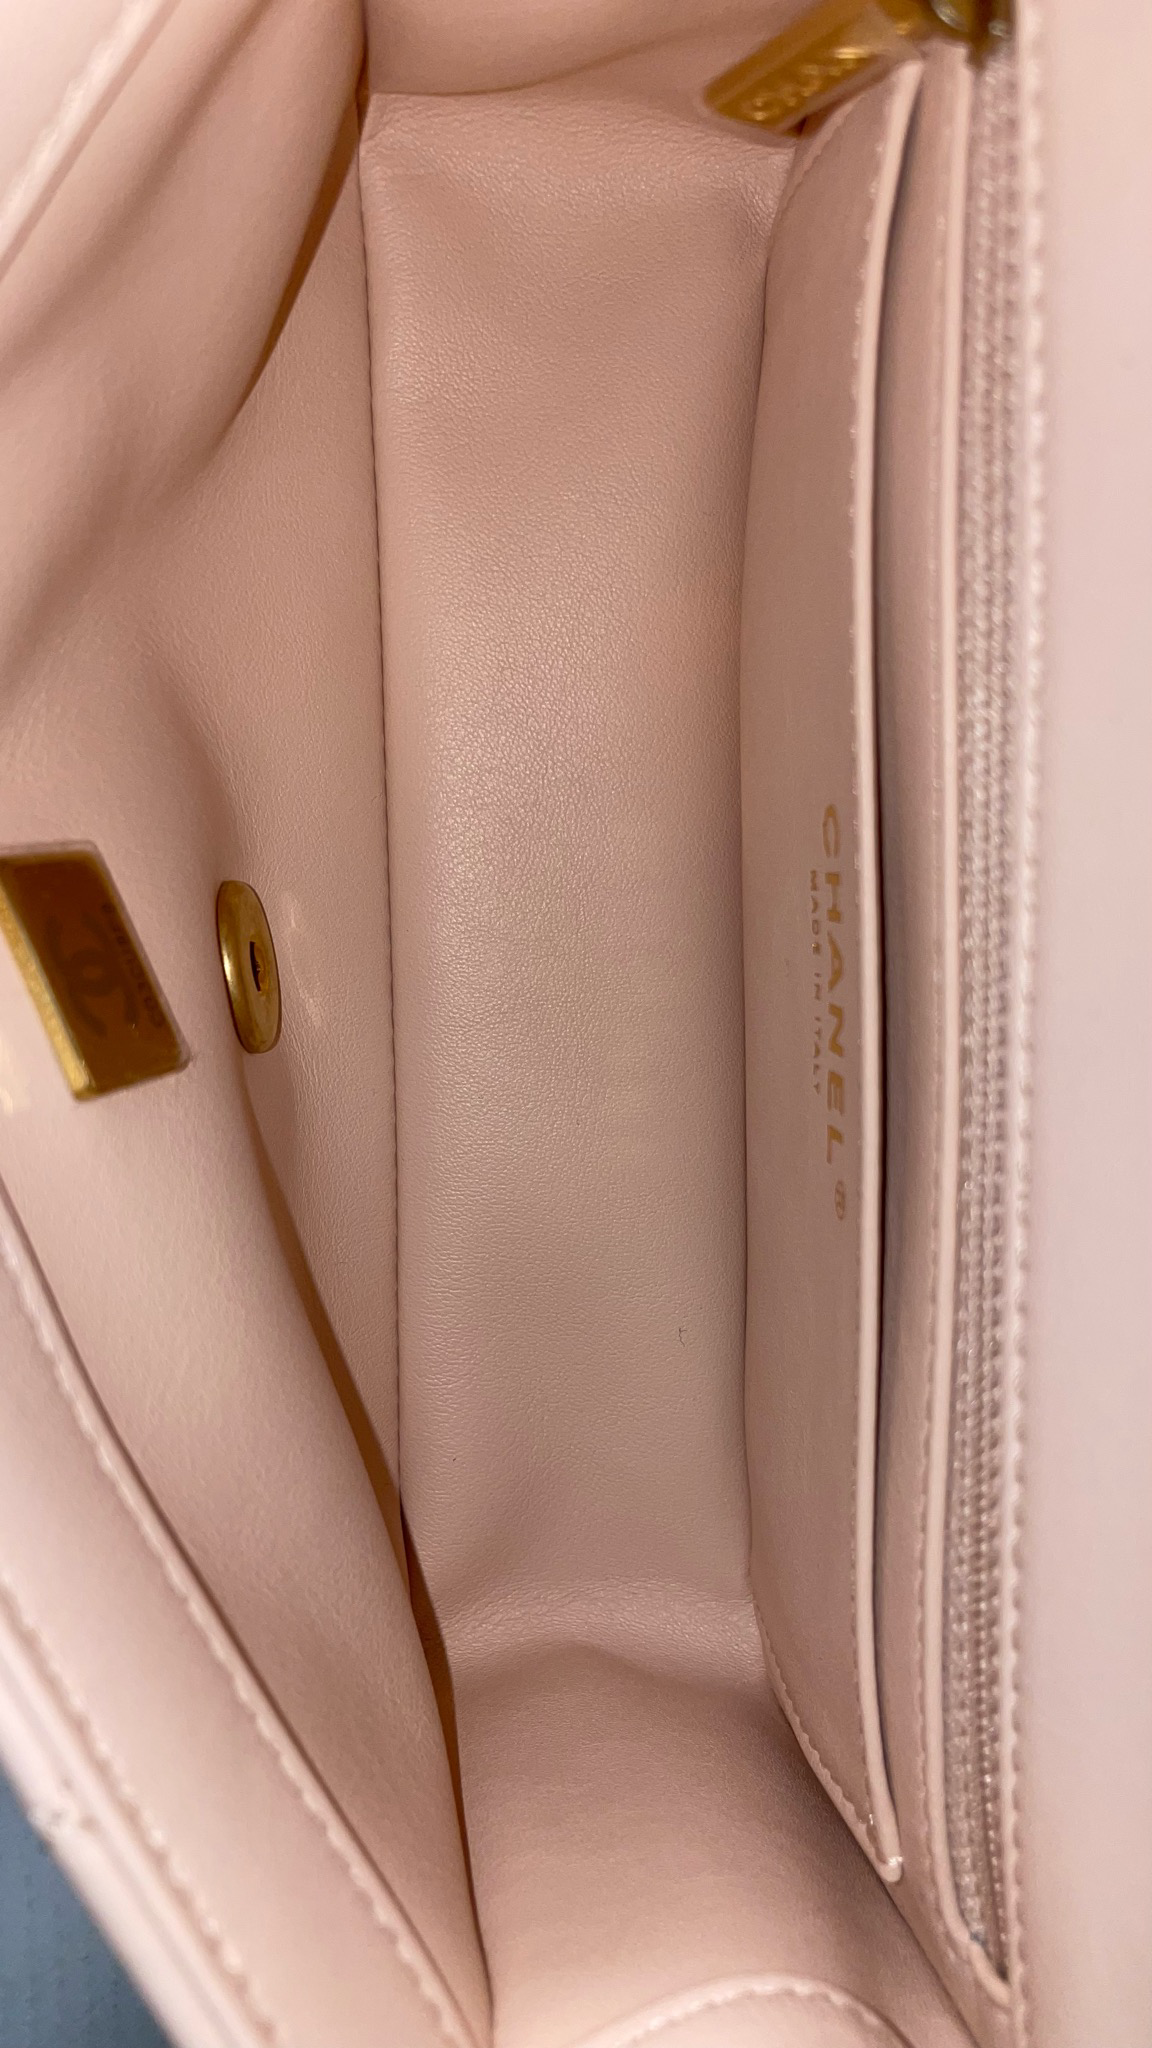 Chanel Pearl Crush Mini Rectangular, Beige Pink Lambskin with Gold  Hardware, New in Box WA001